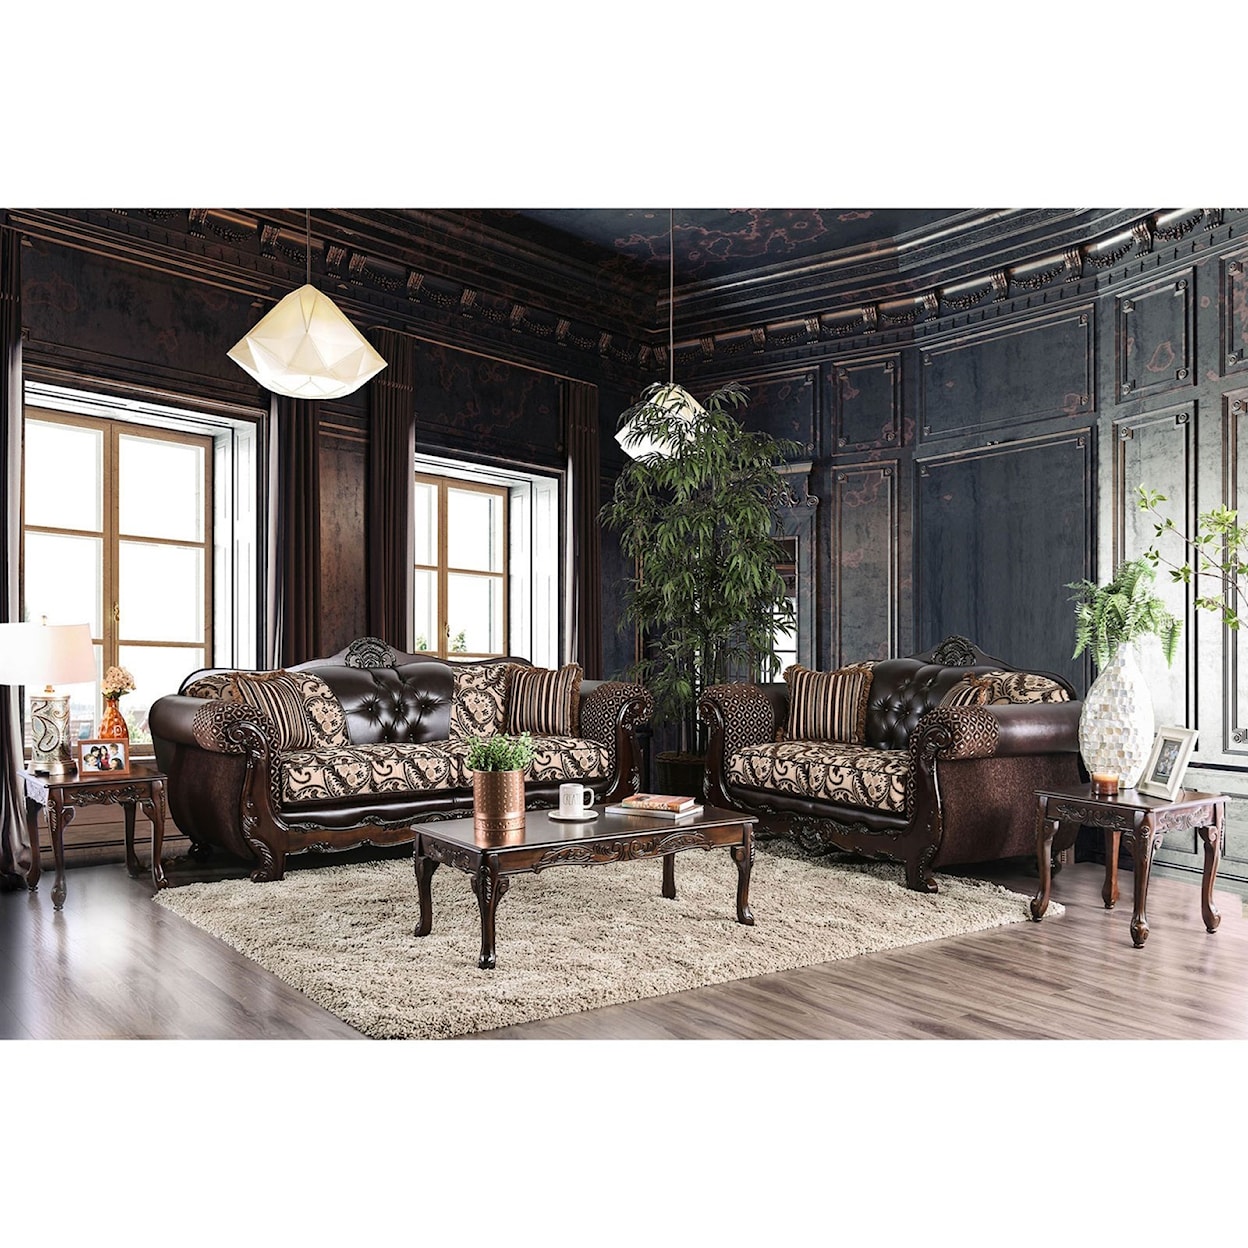 Furniture of America Quirino Living Room Group